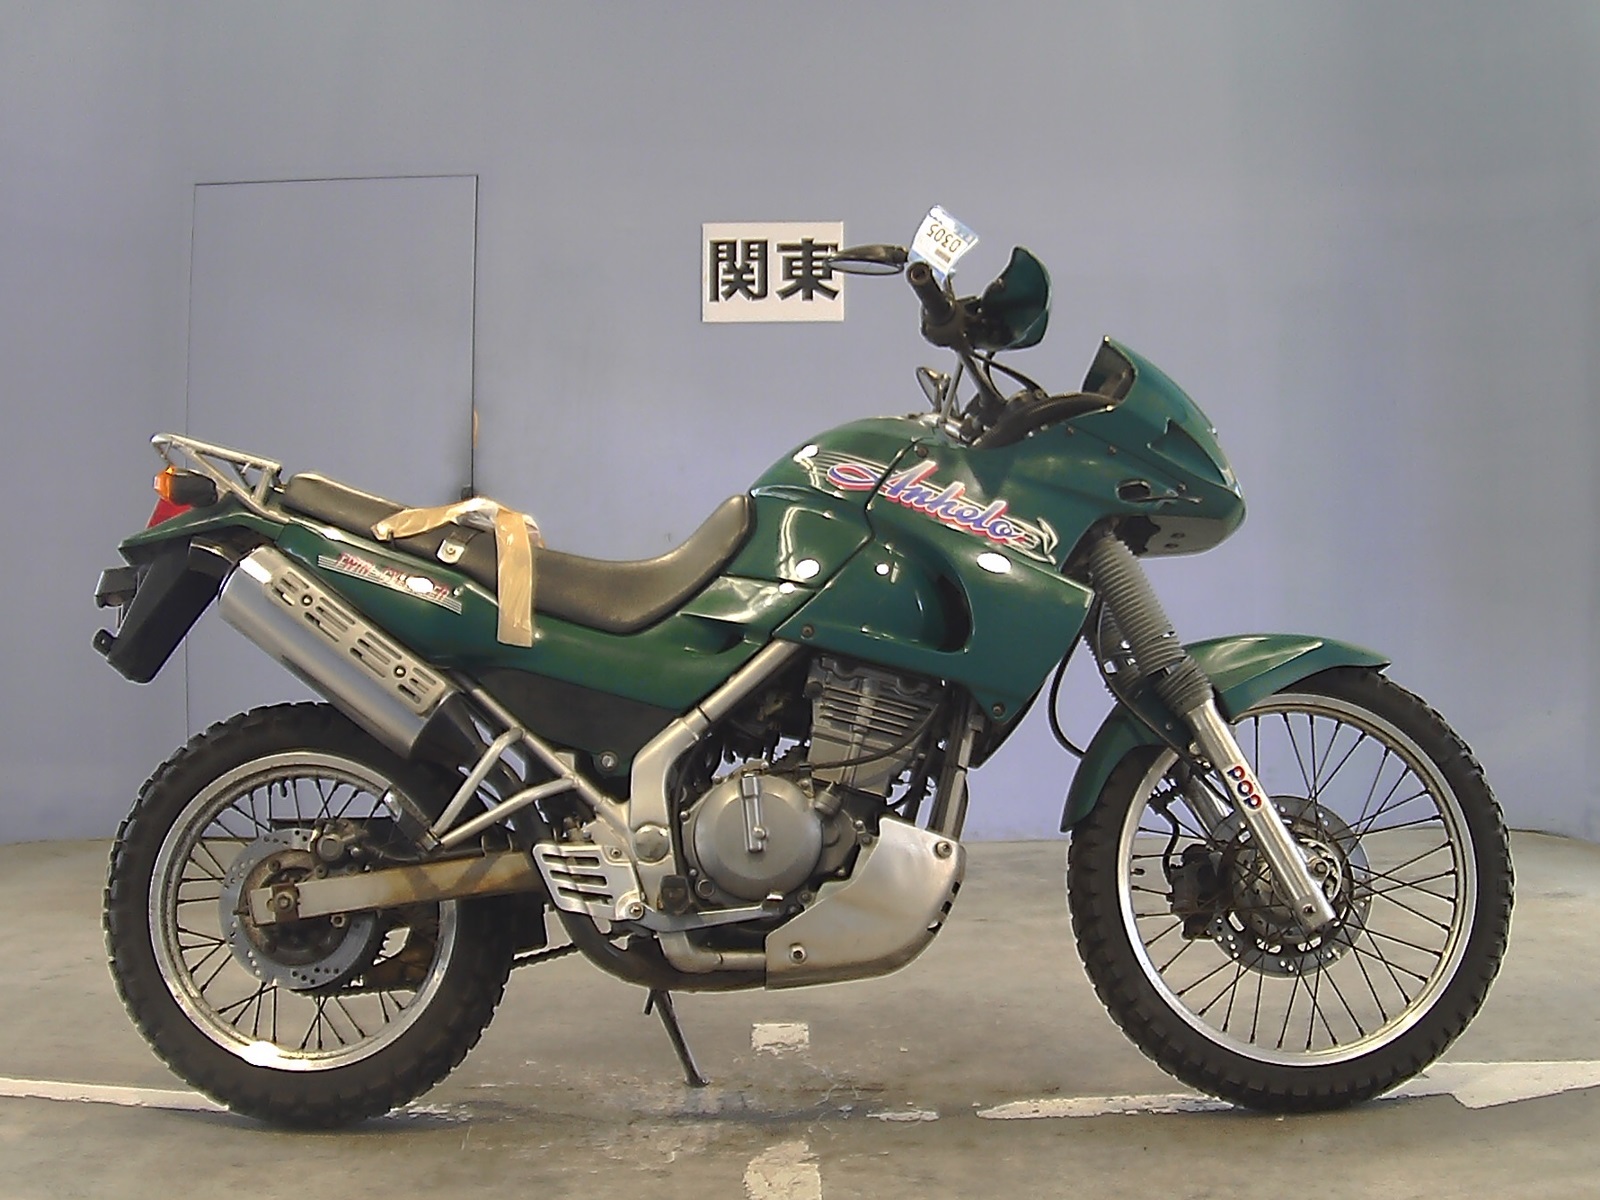 Kawasaki kle 250 anhelo: review, history, specs - bikeswiki.com, japanese motorcycle encyclopedia